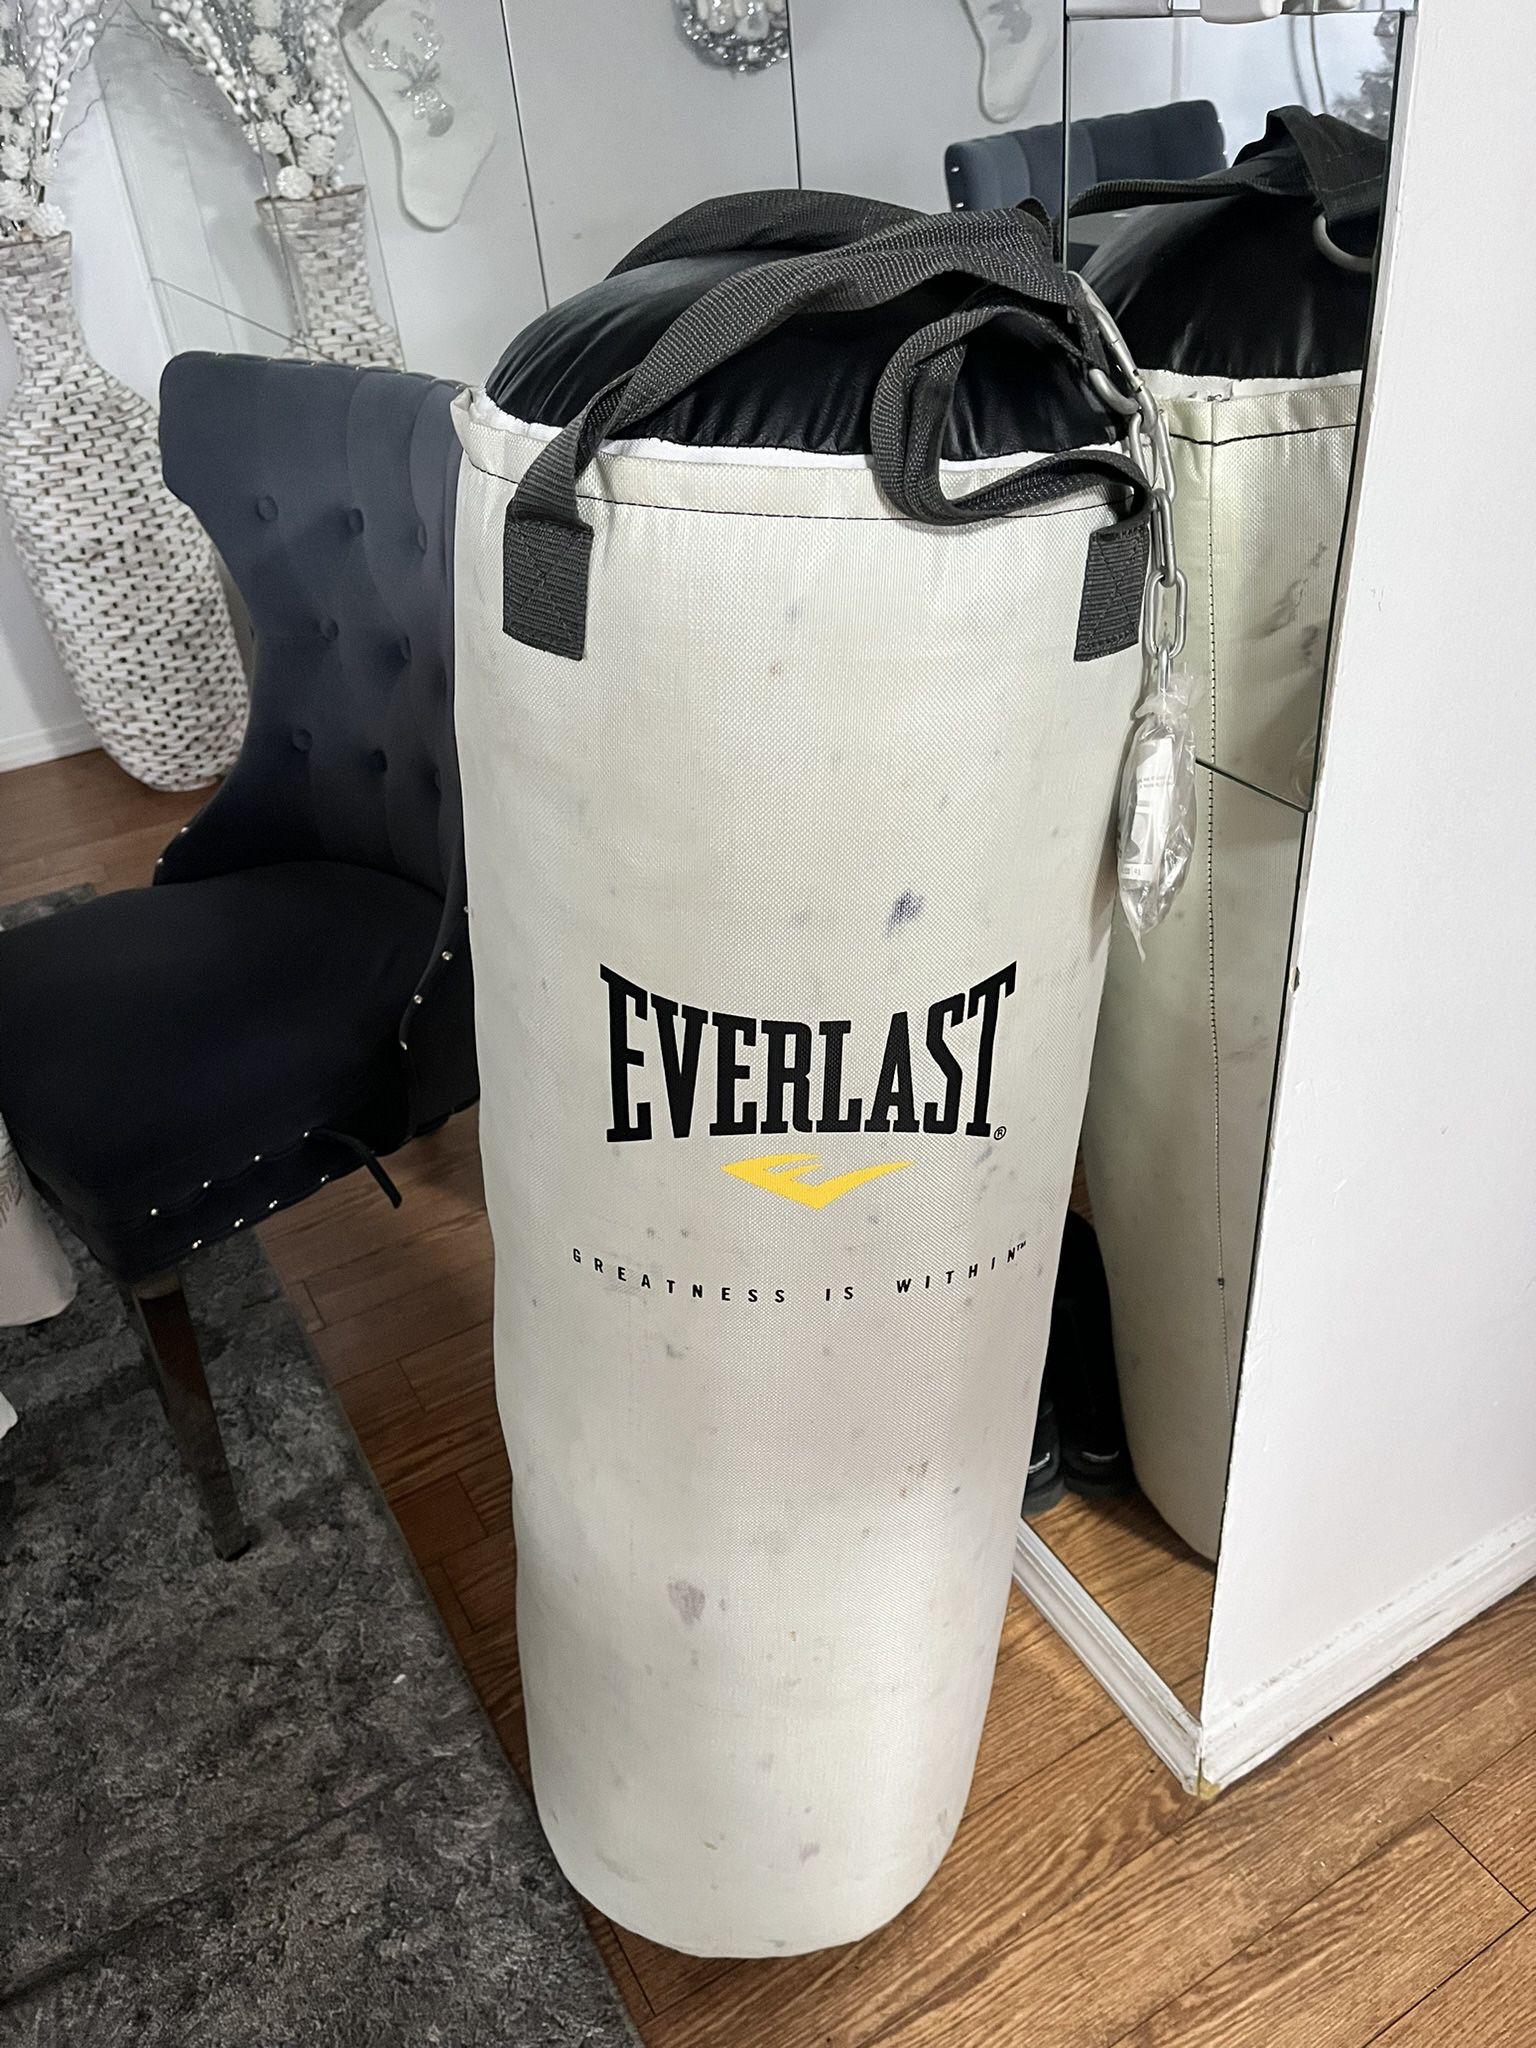  Everlast Punching Bag 